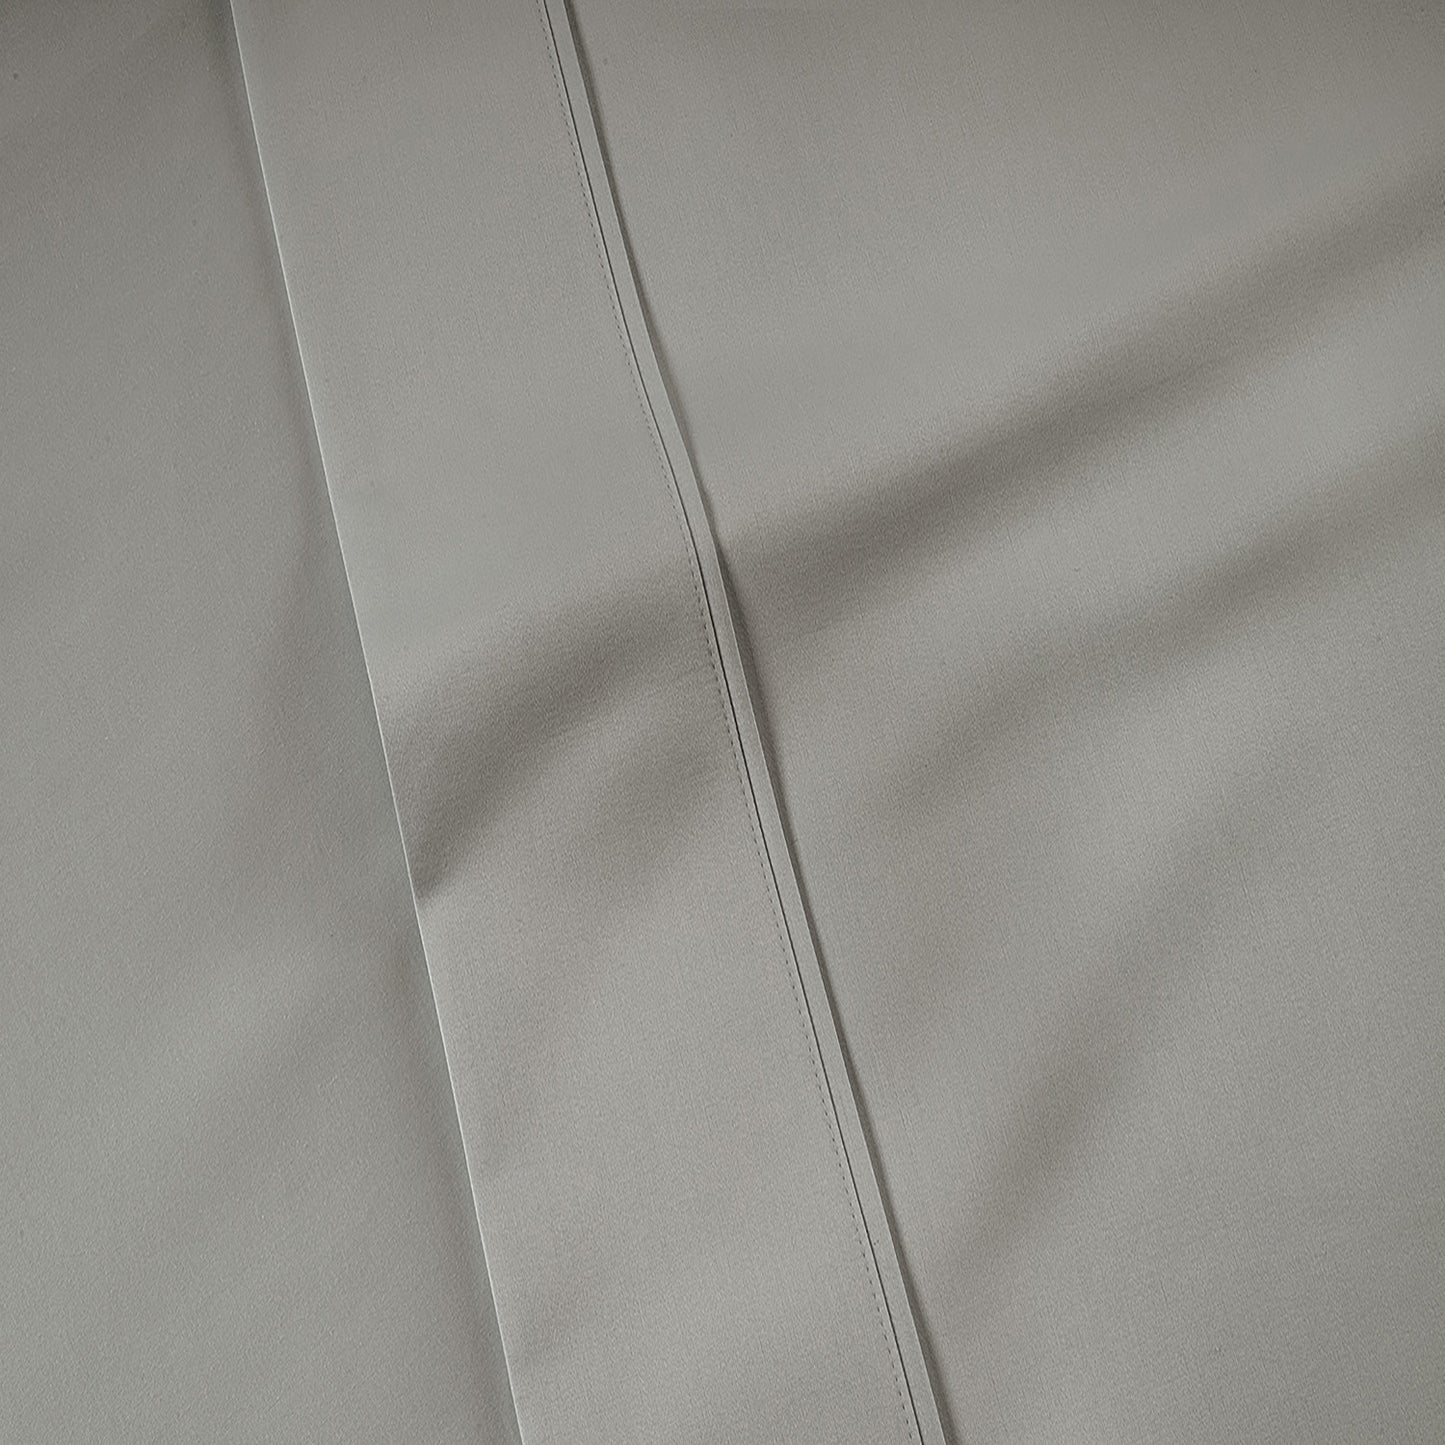 London Stone Grey, 400 Thread Count, 100% Egyptian Cotton Sheet Sets